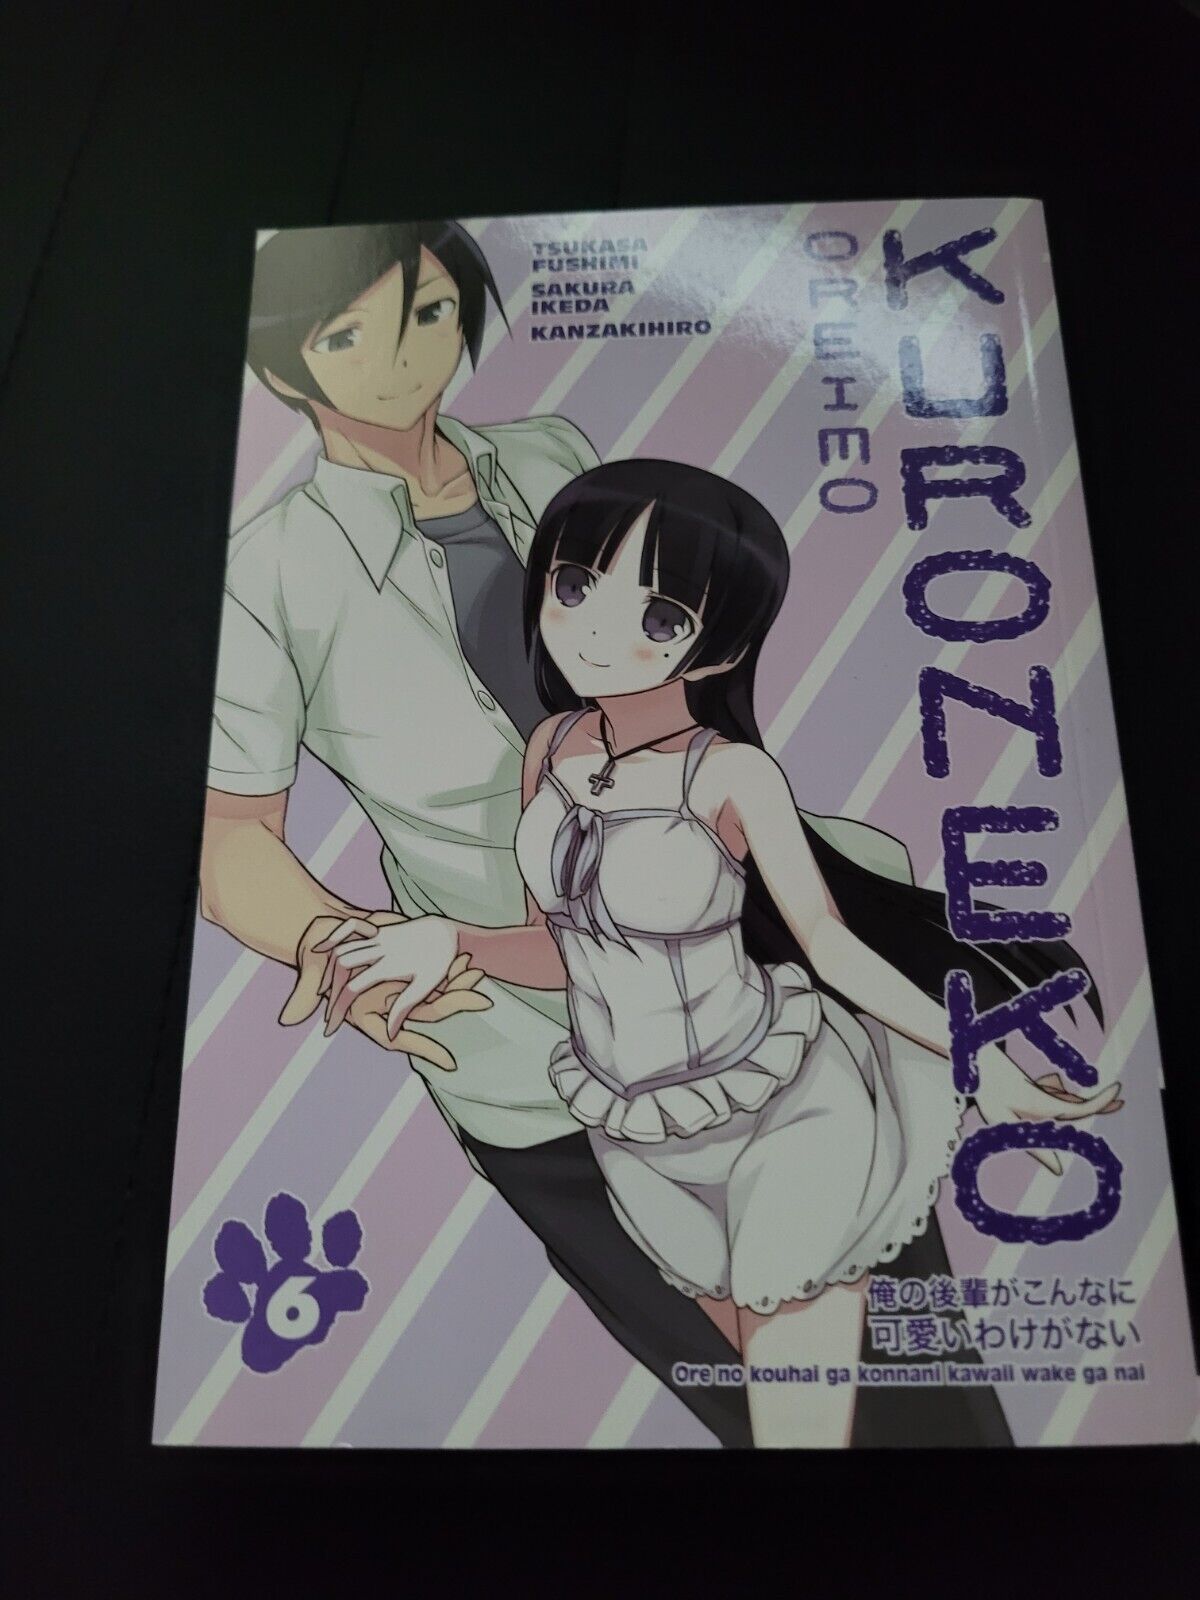 Kuroneko Oreimo Volume 6 by Tsukasa Fushimi (OOP)